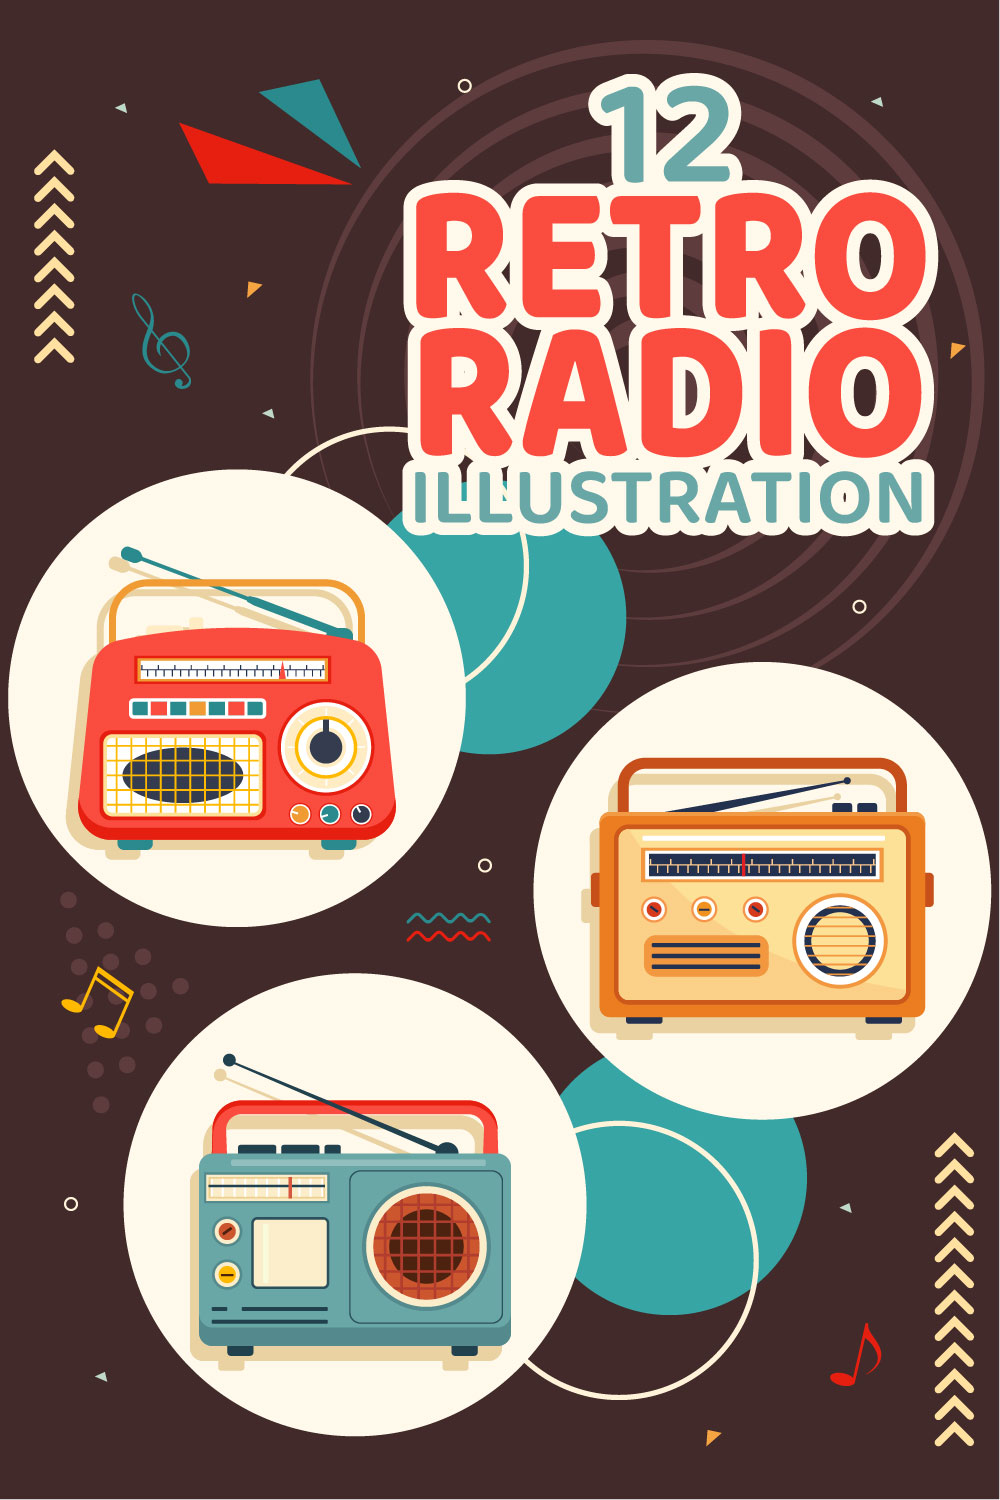 12 Retro Radio Illustration pinterest preview image.